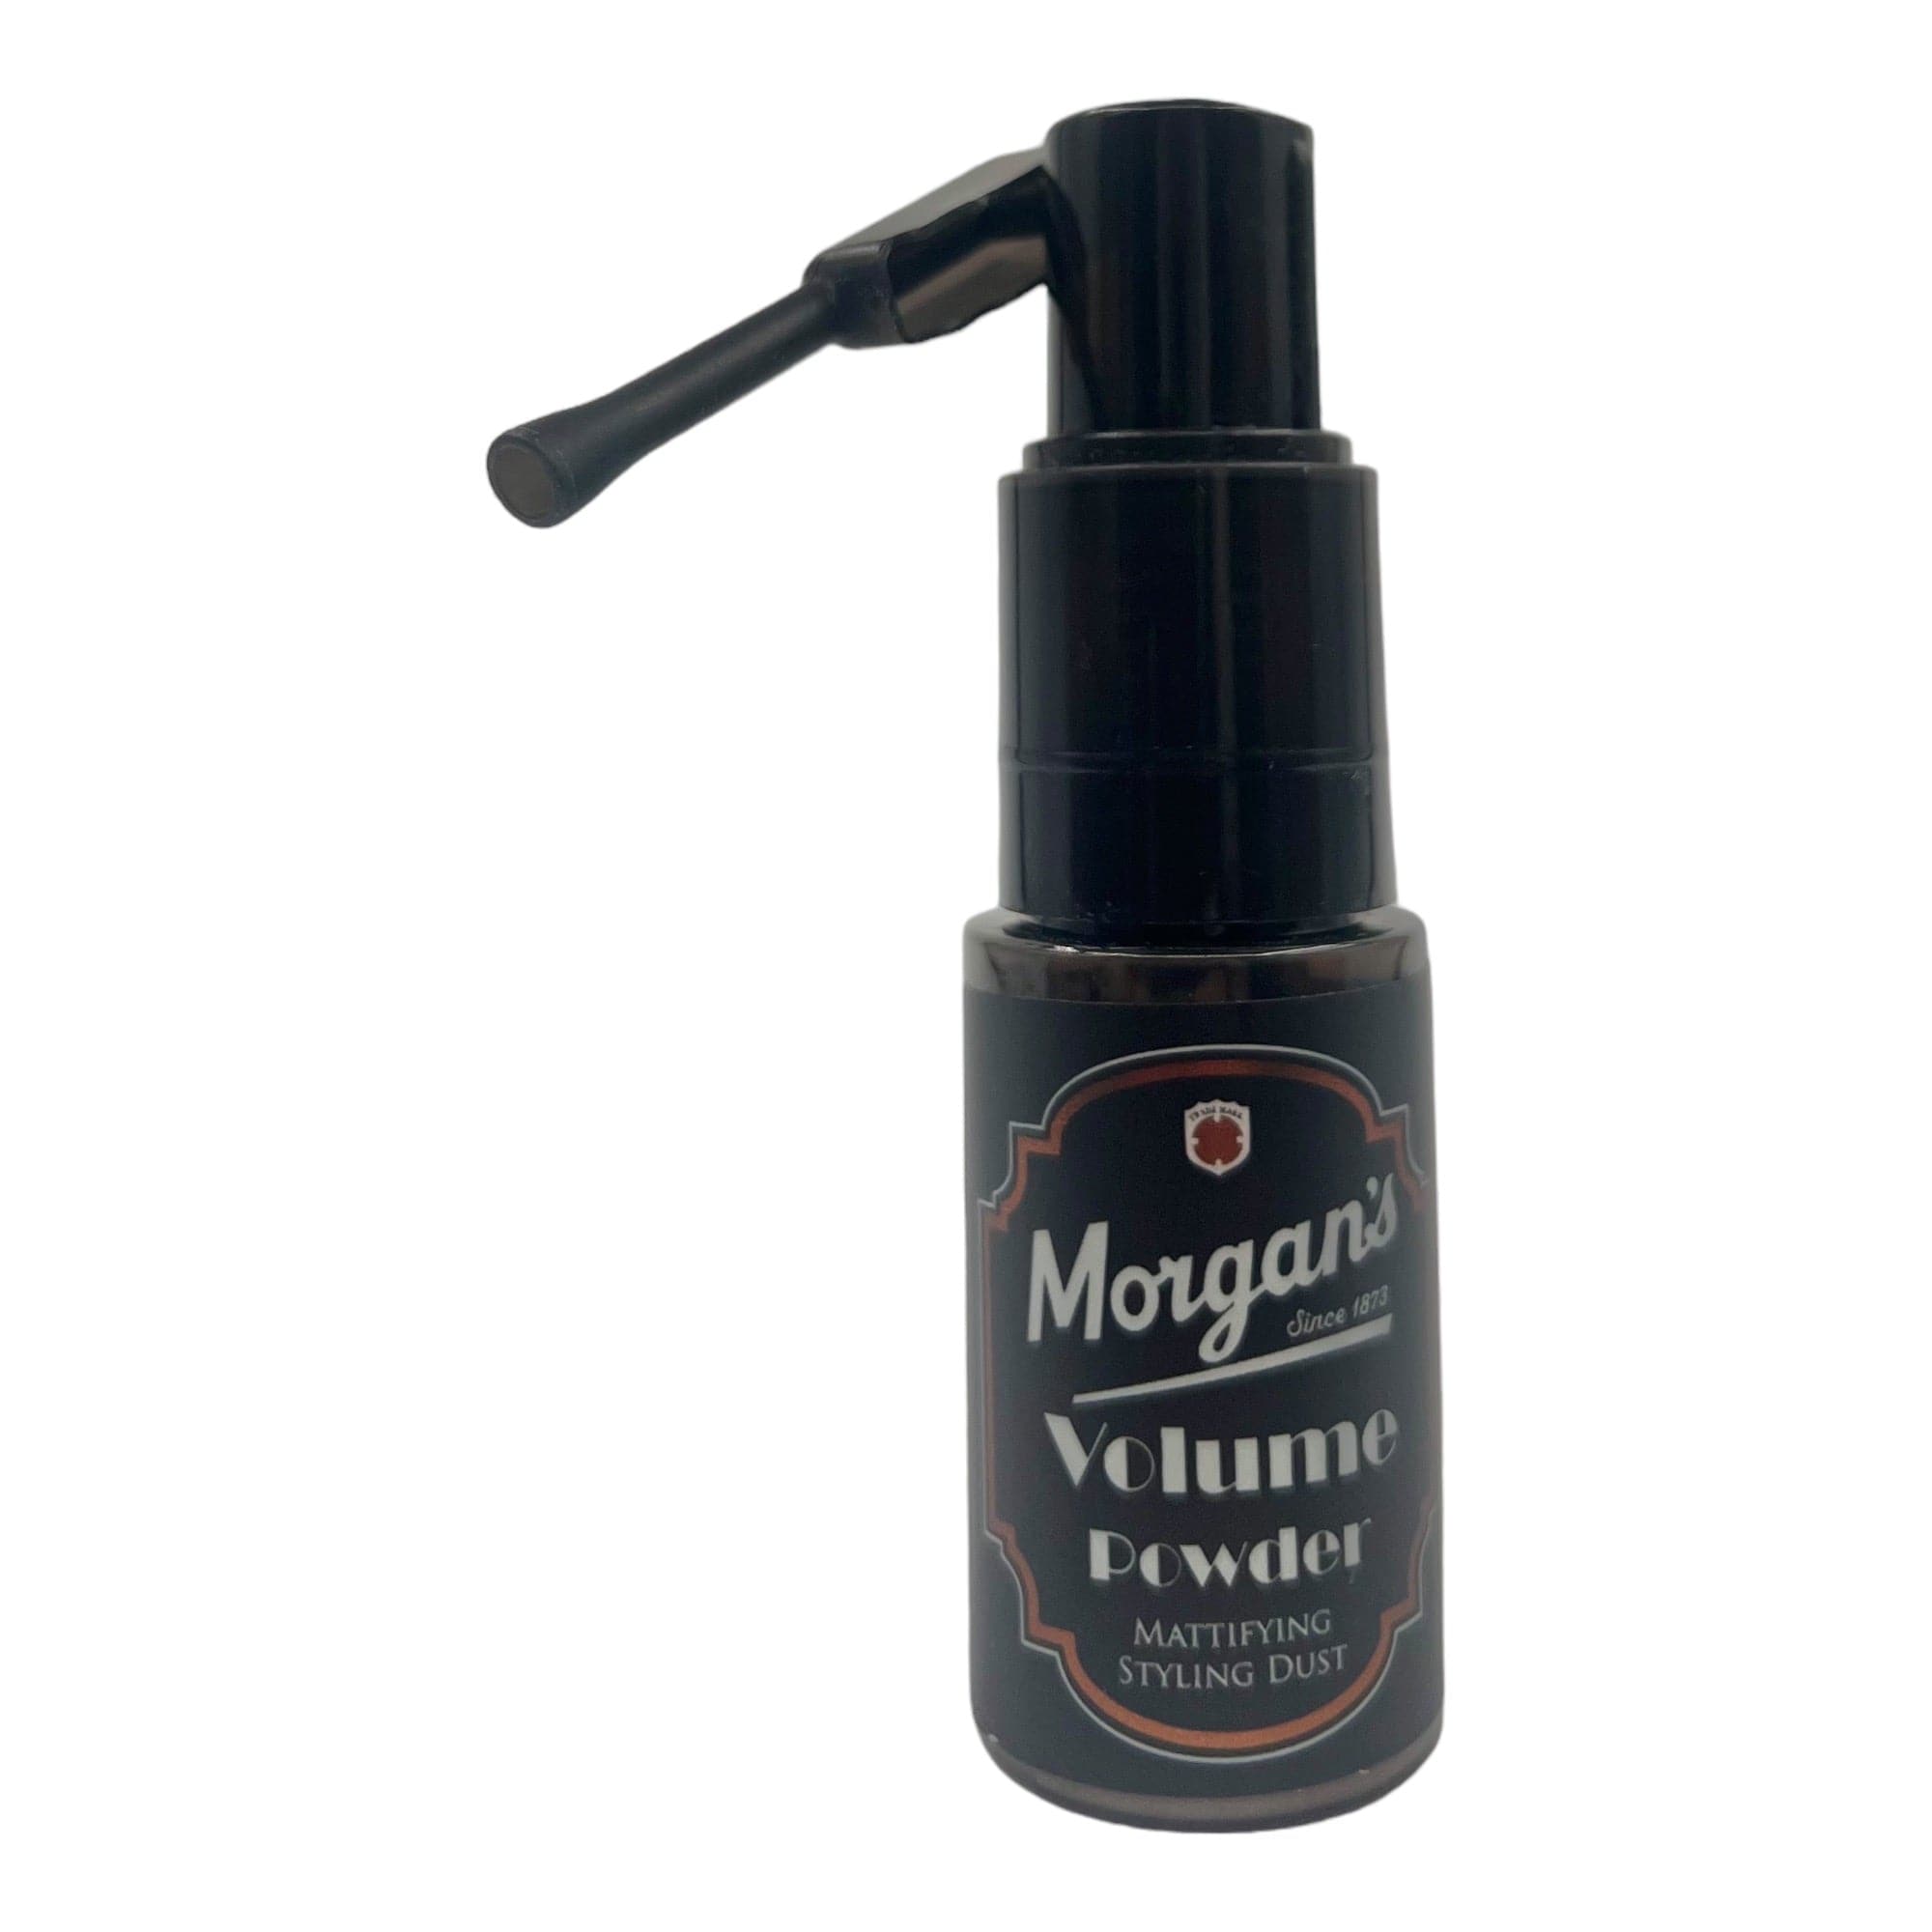 Morgan's - Volume Powder Mattifying Styling Dust 5g